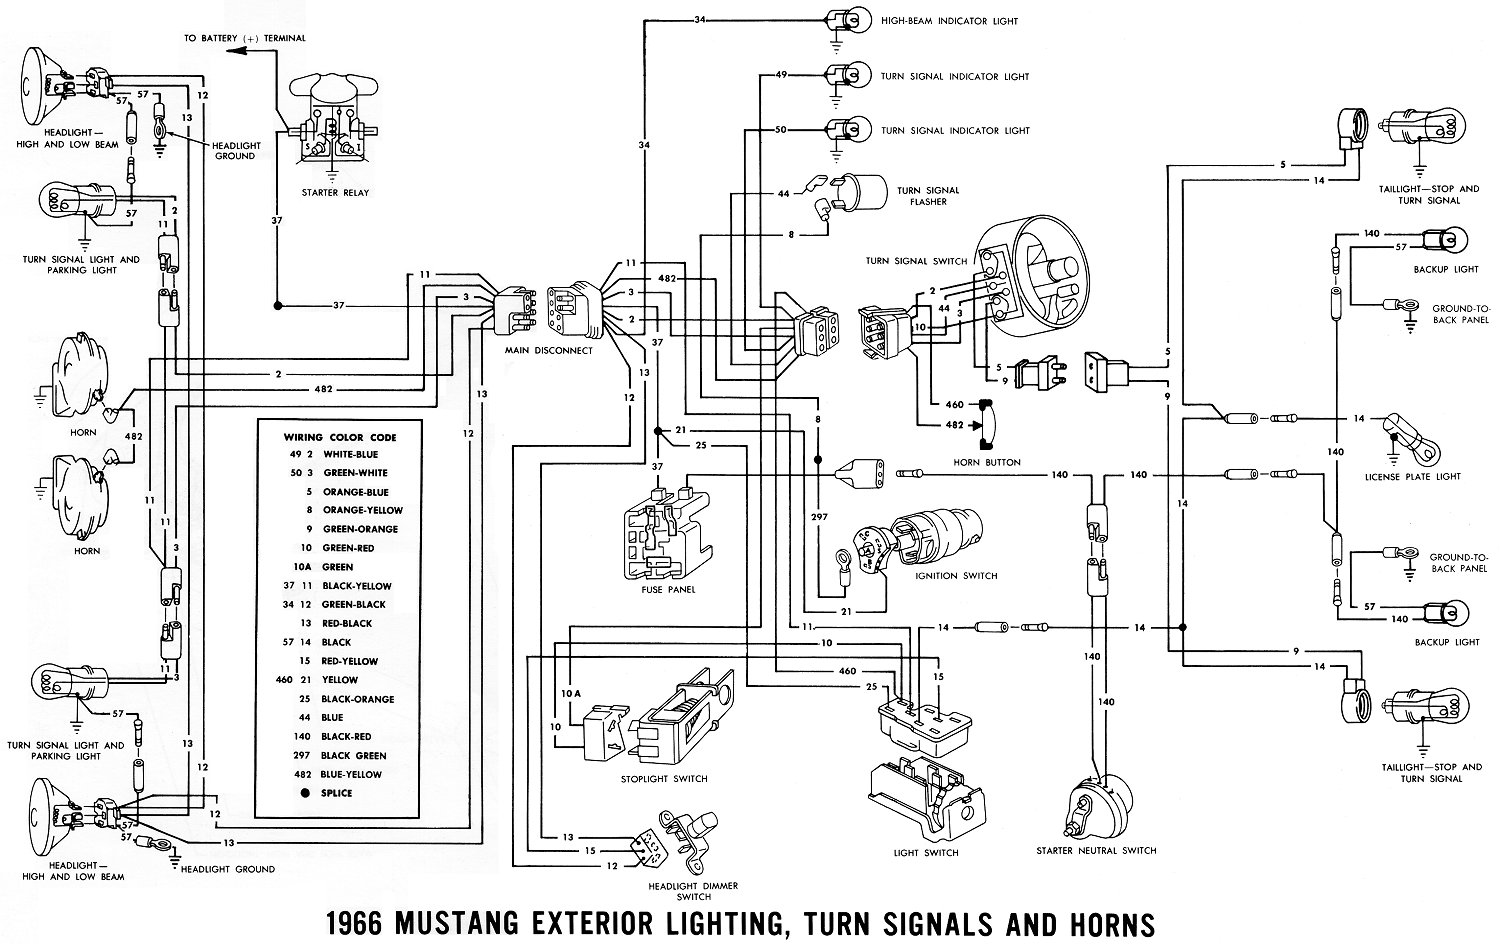 Vintage Mustang Wiring Diagrams